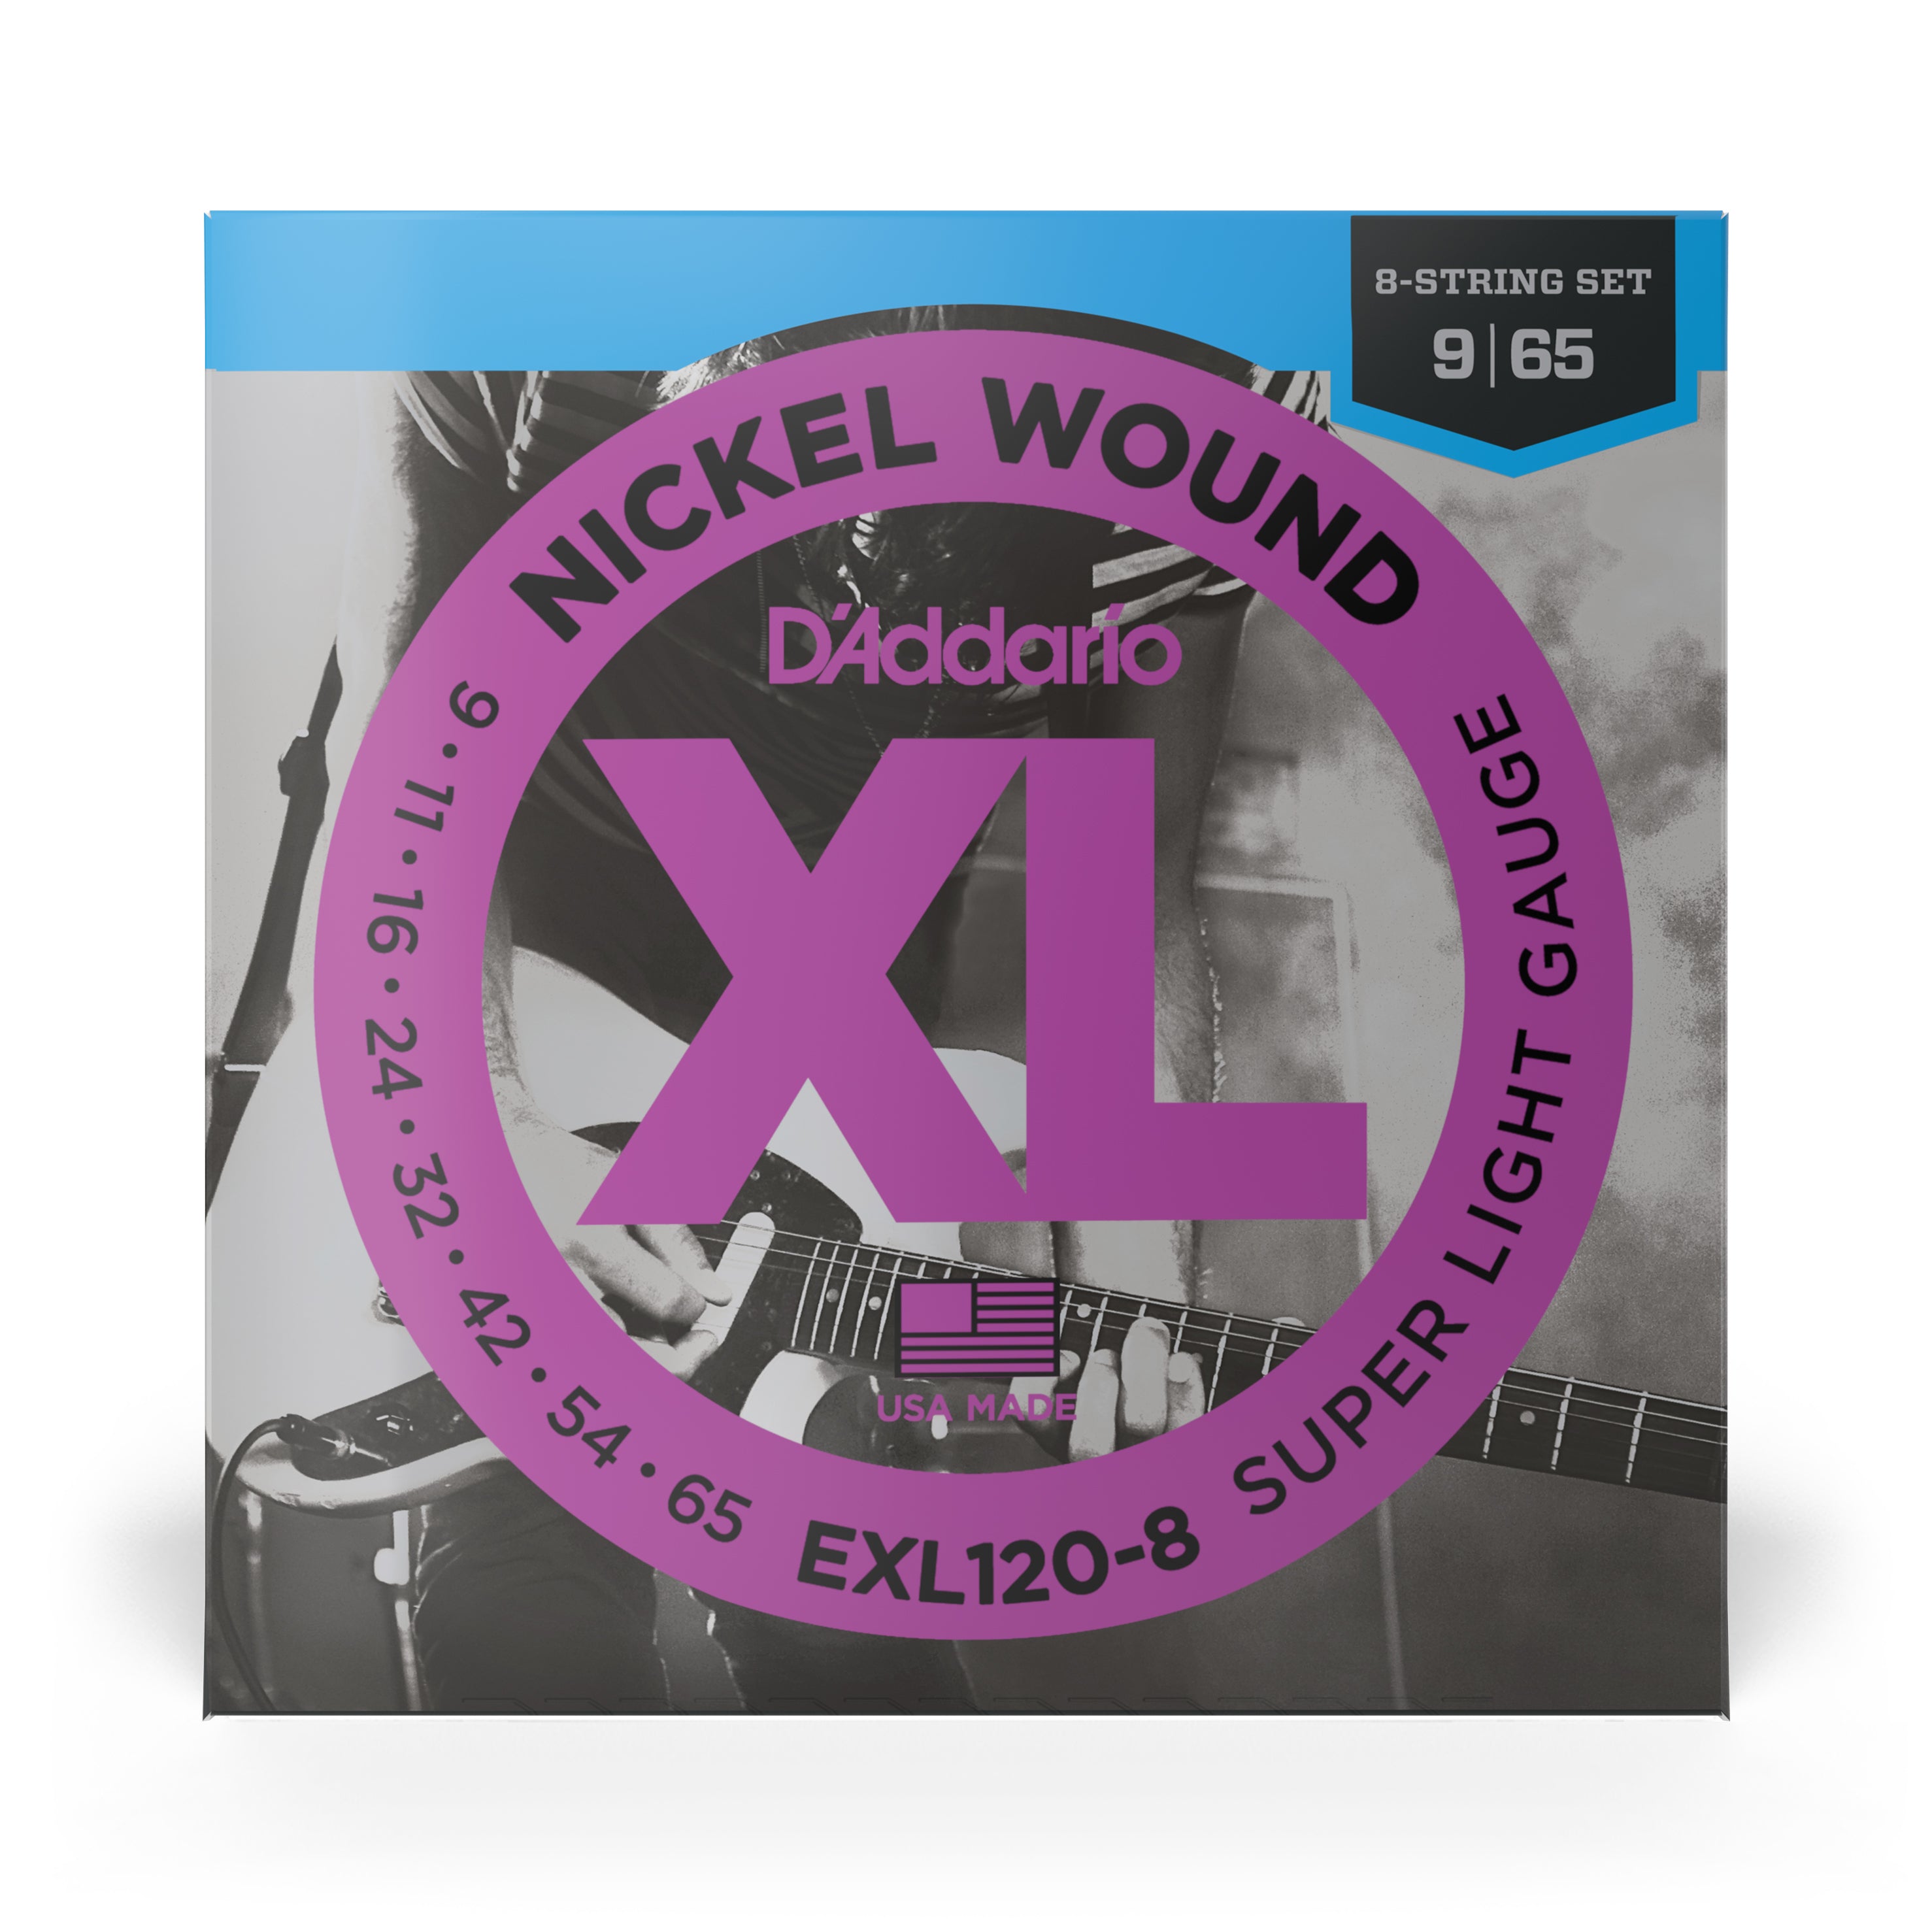 D'Addario Nickel Wound 9-65 8-String Electric Guitar Strings, Light